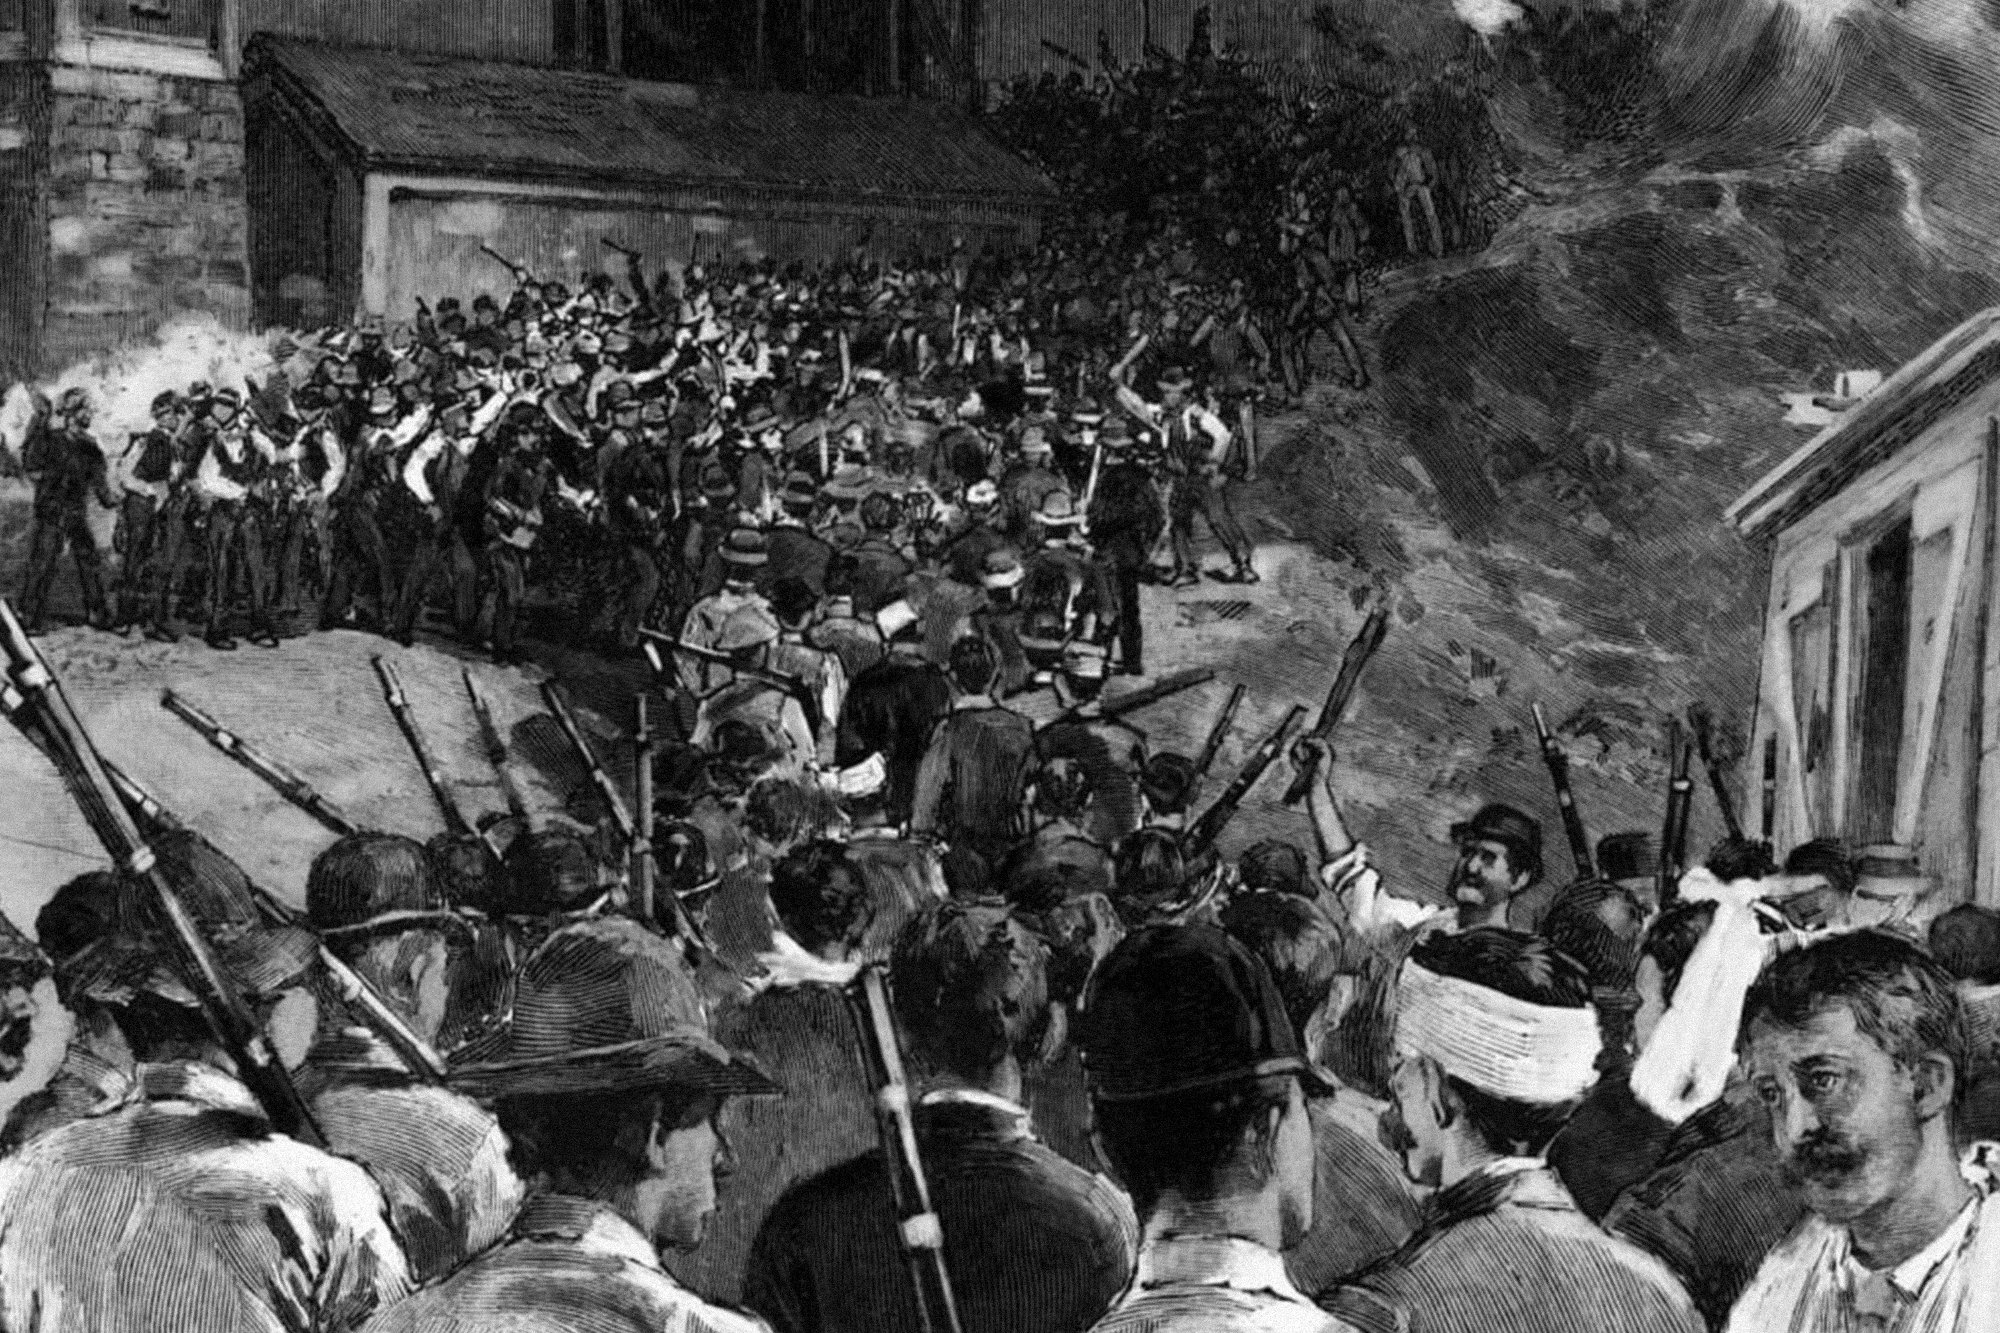 The Homestead Strike of 1892